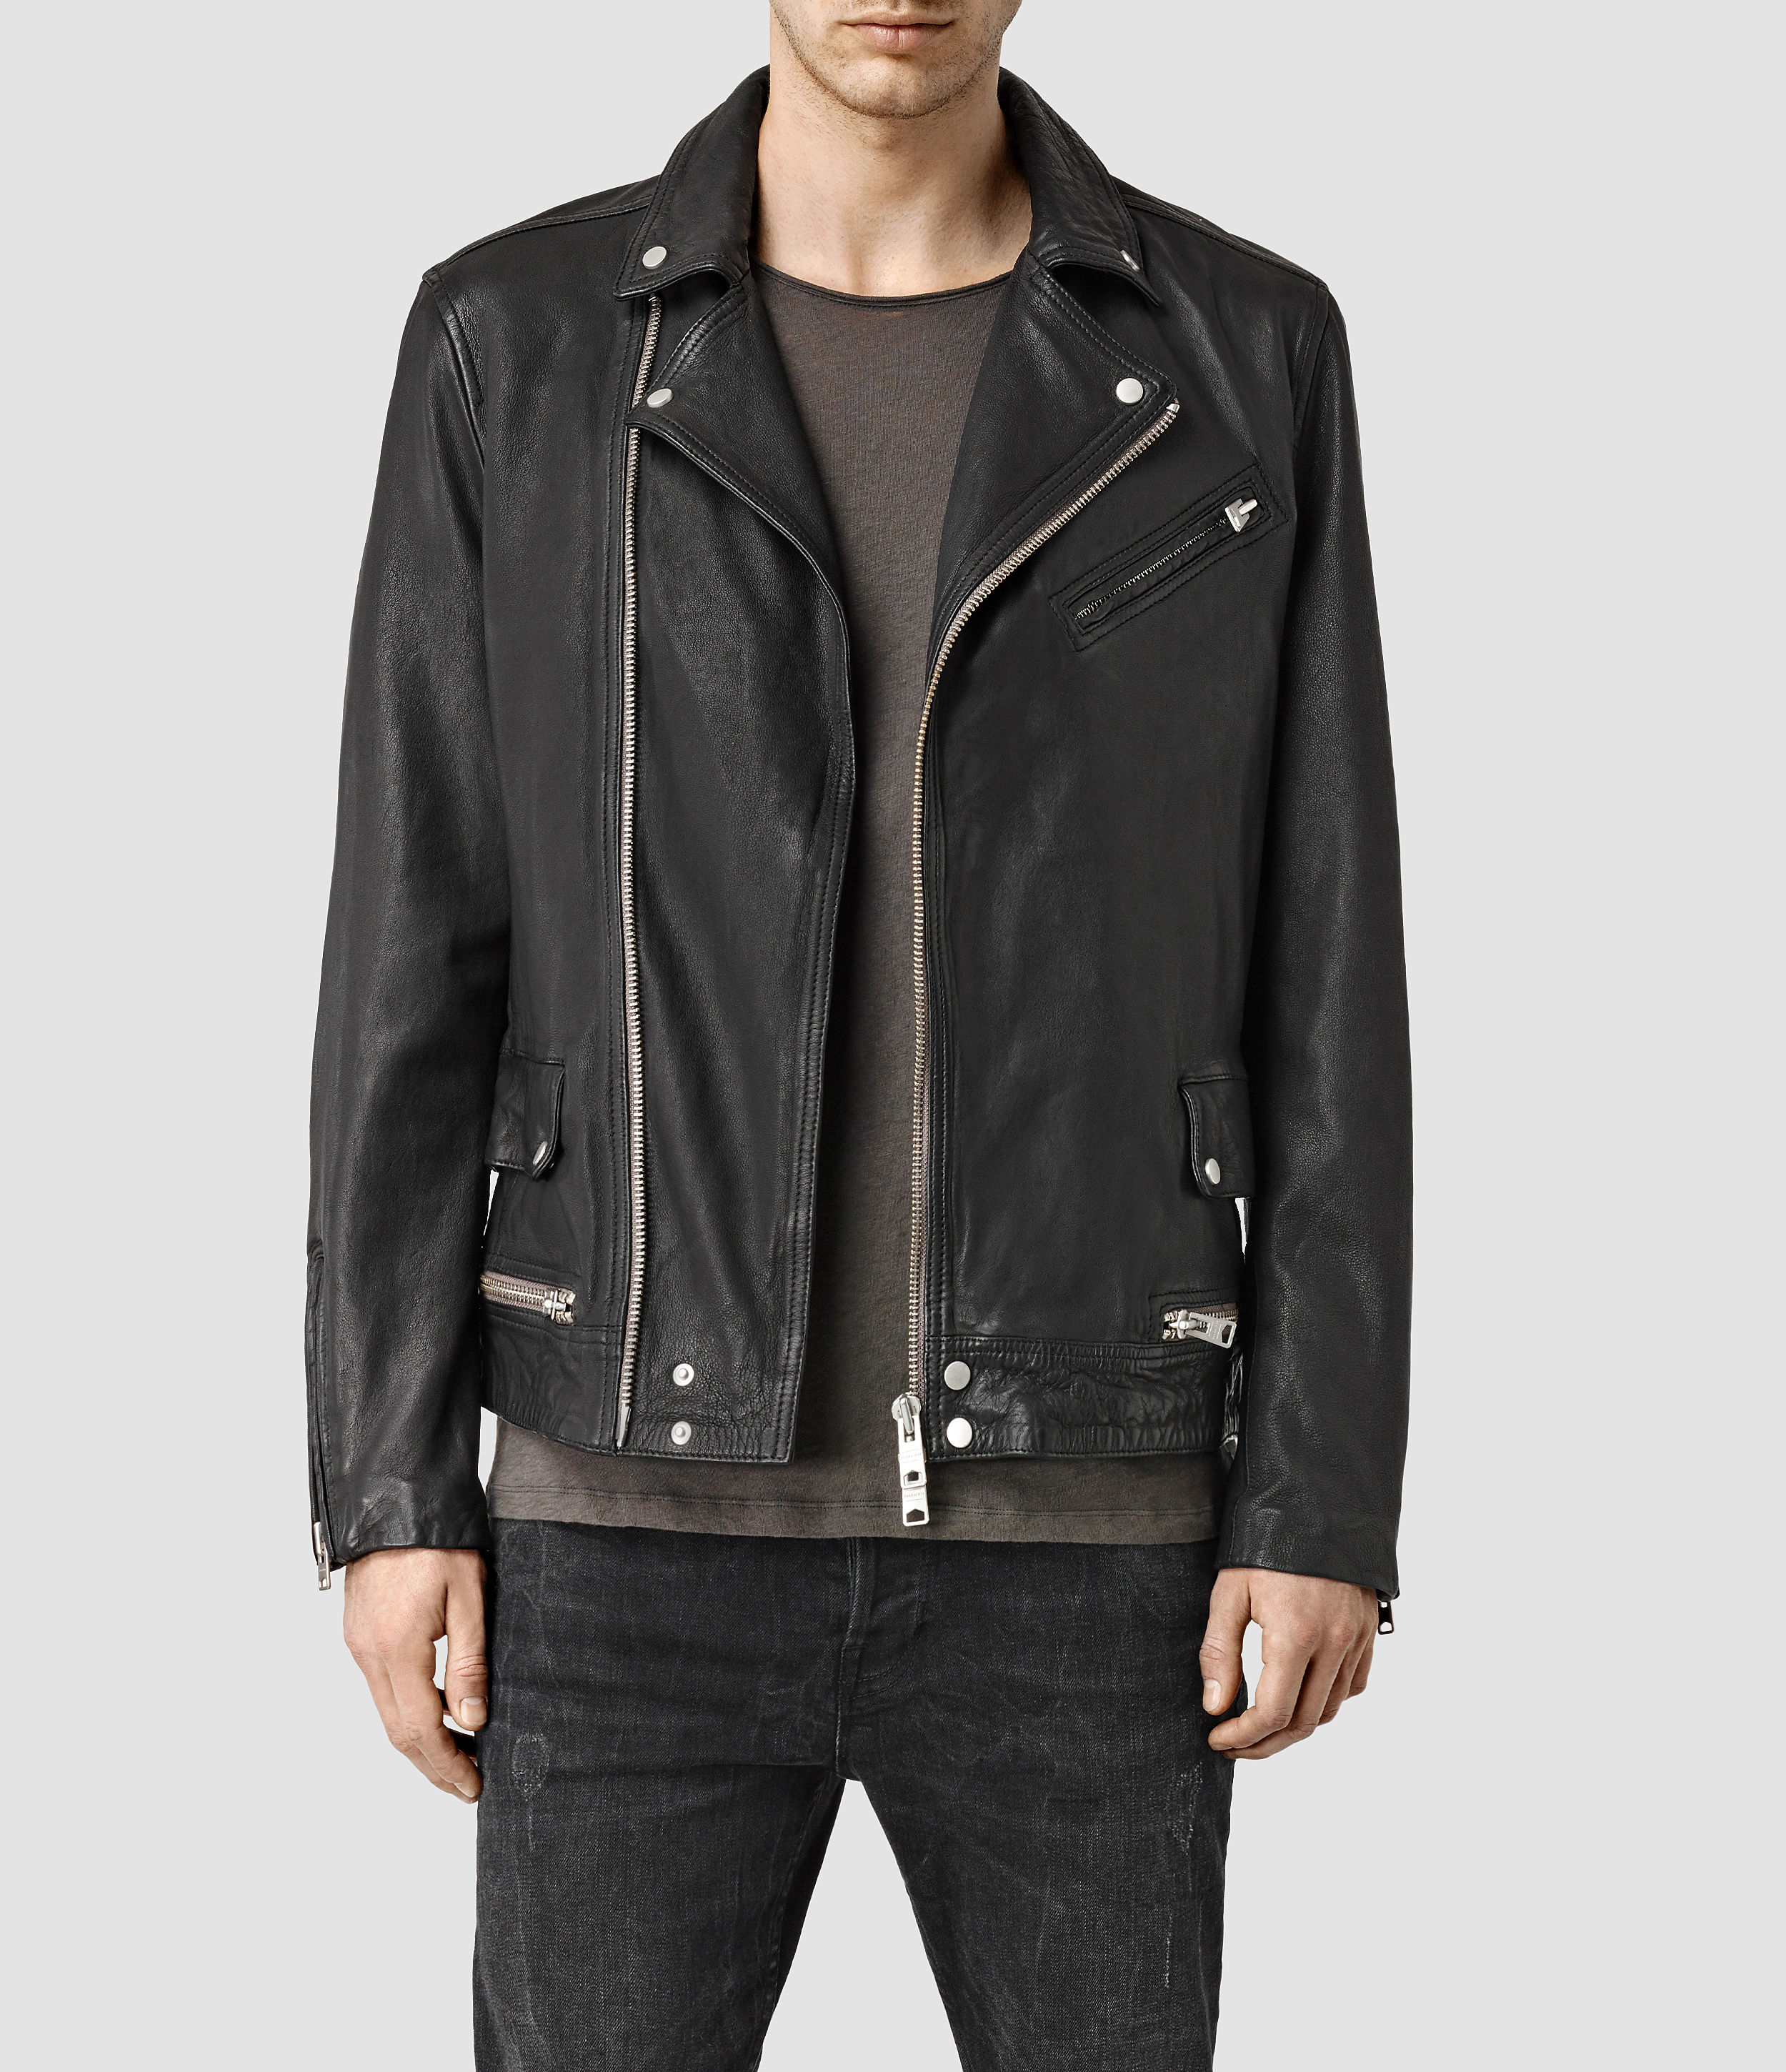 Lyst Allsaints Clay Leather Biker Jacket in Black for Men